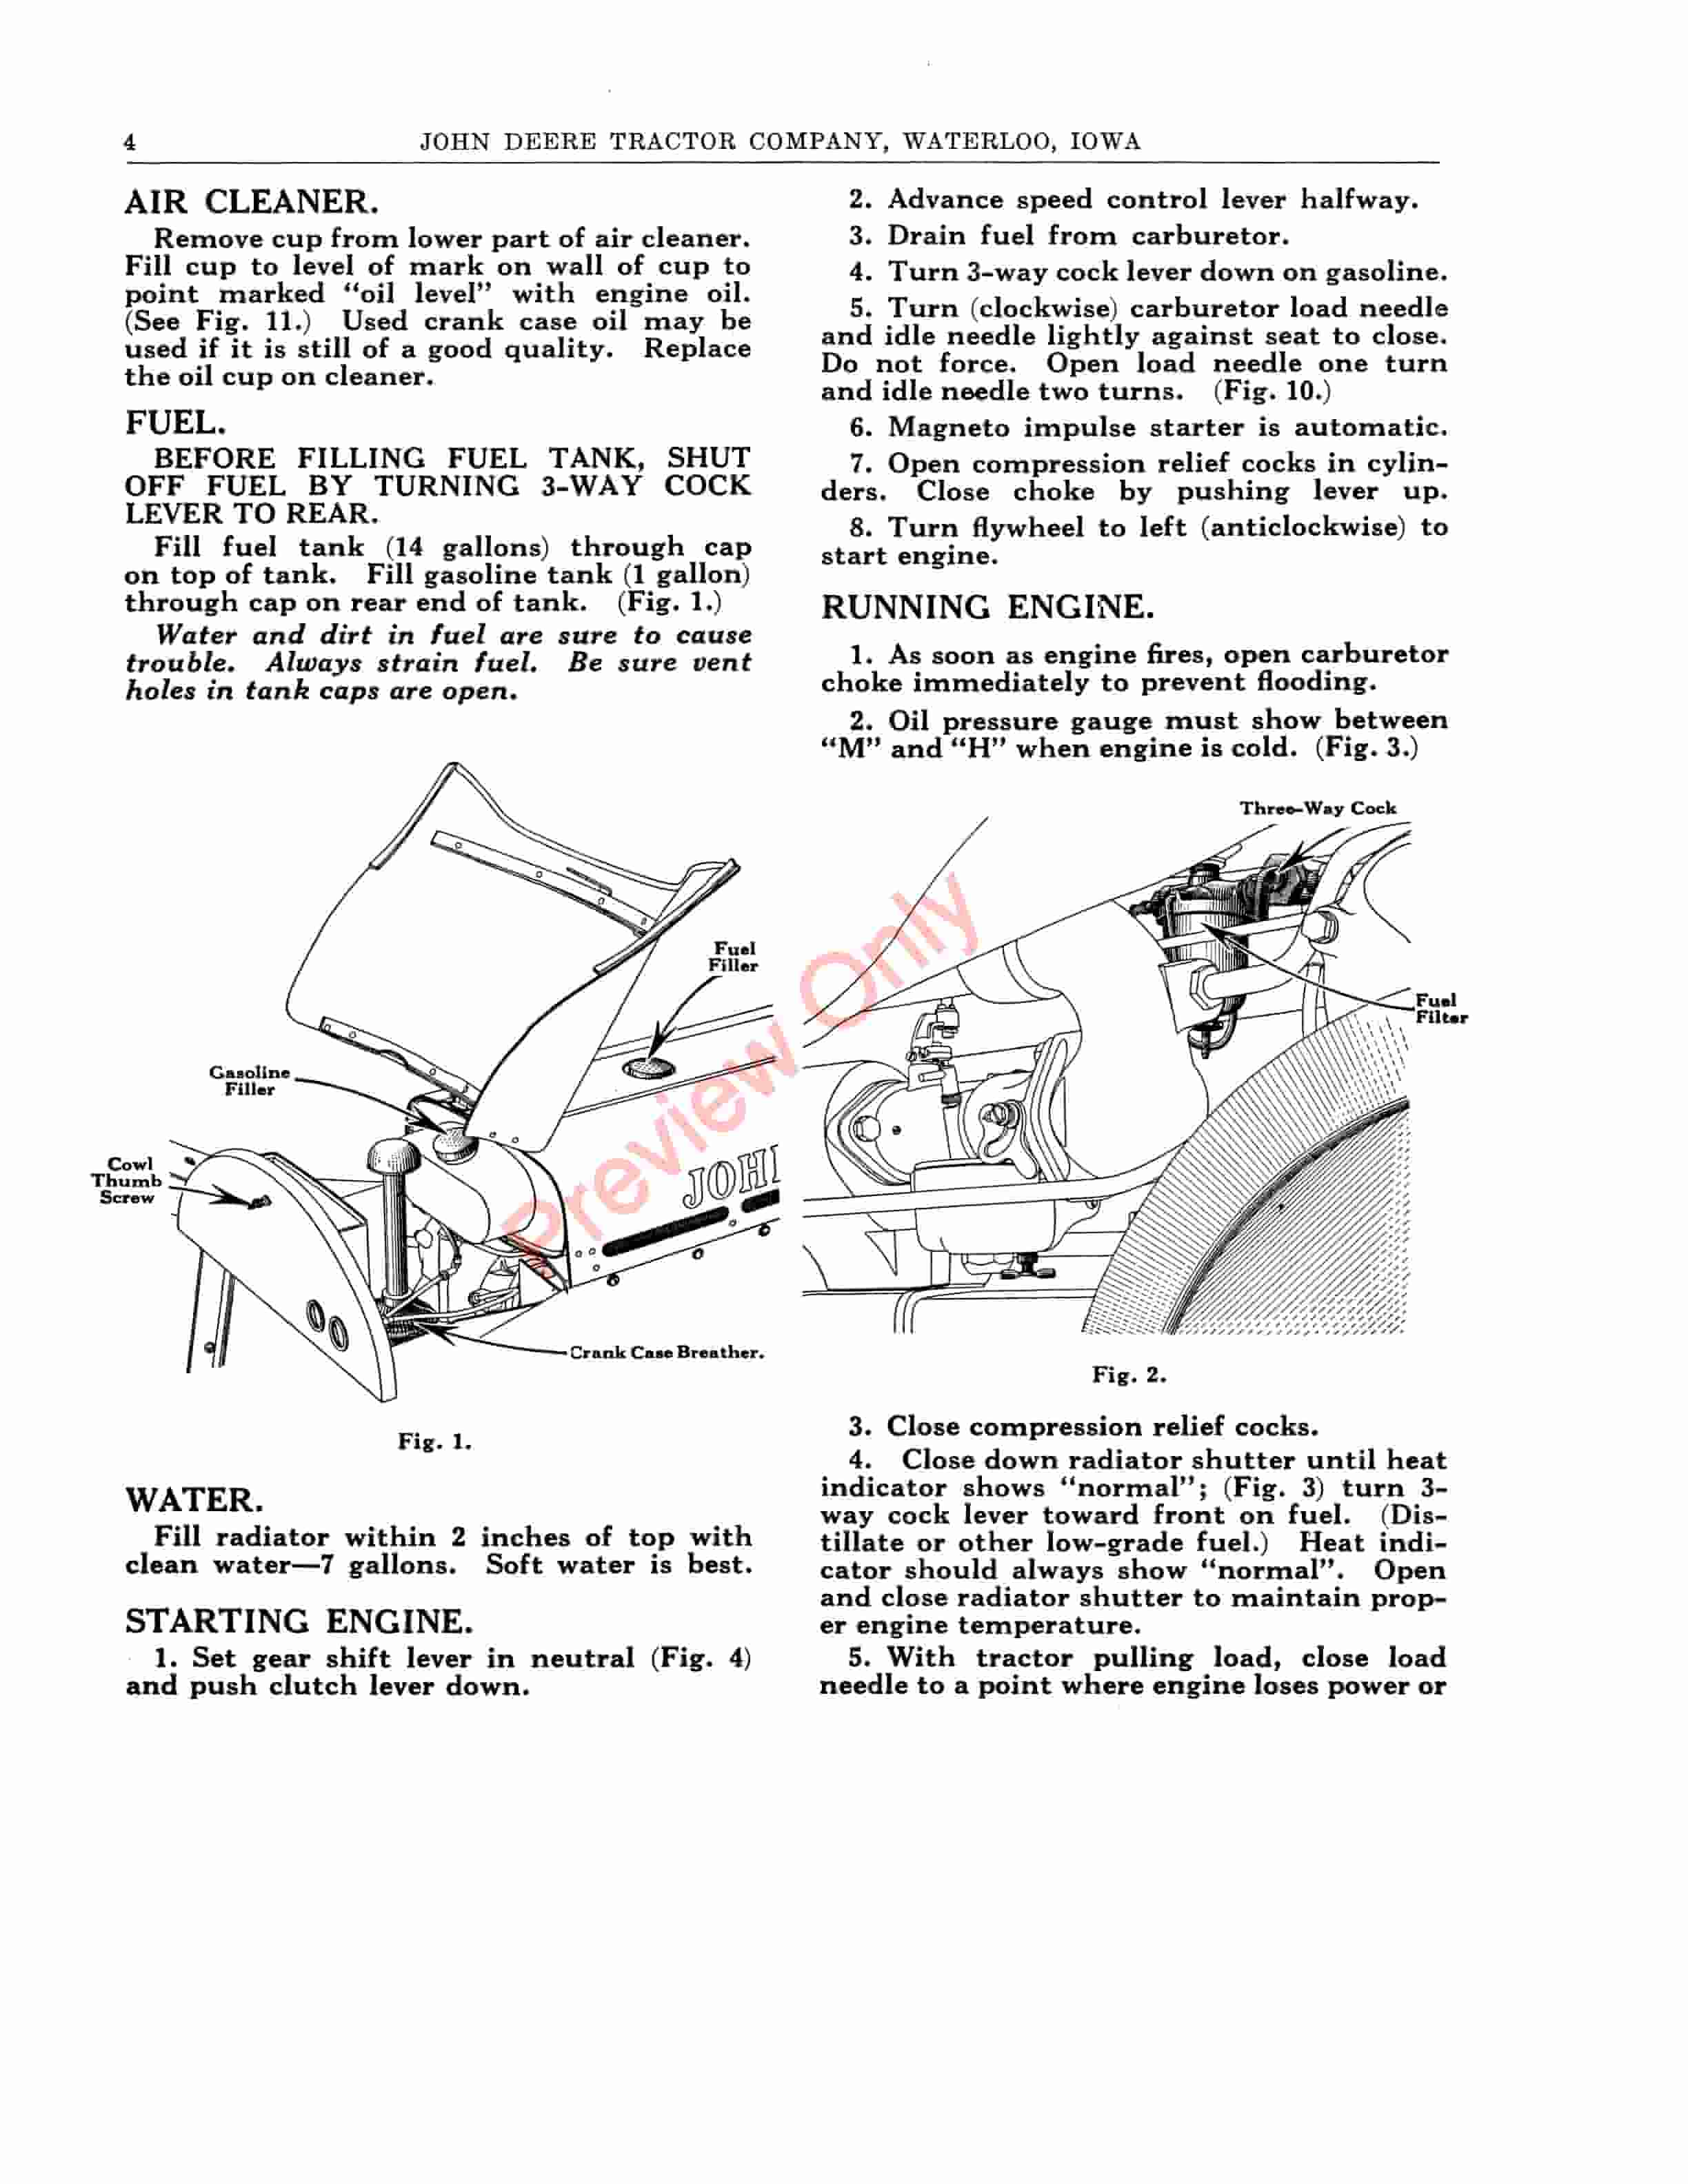 John Deere Model AO Tractor Parts Catalog Operation Manual Instructions And Parts List DIR162A 01AUG37 4